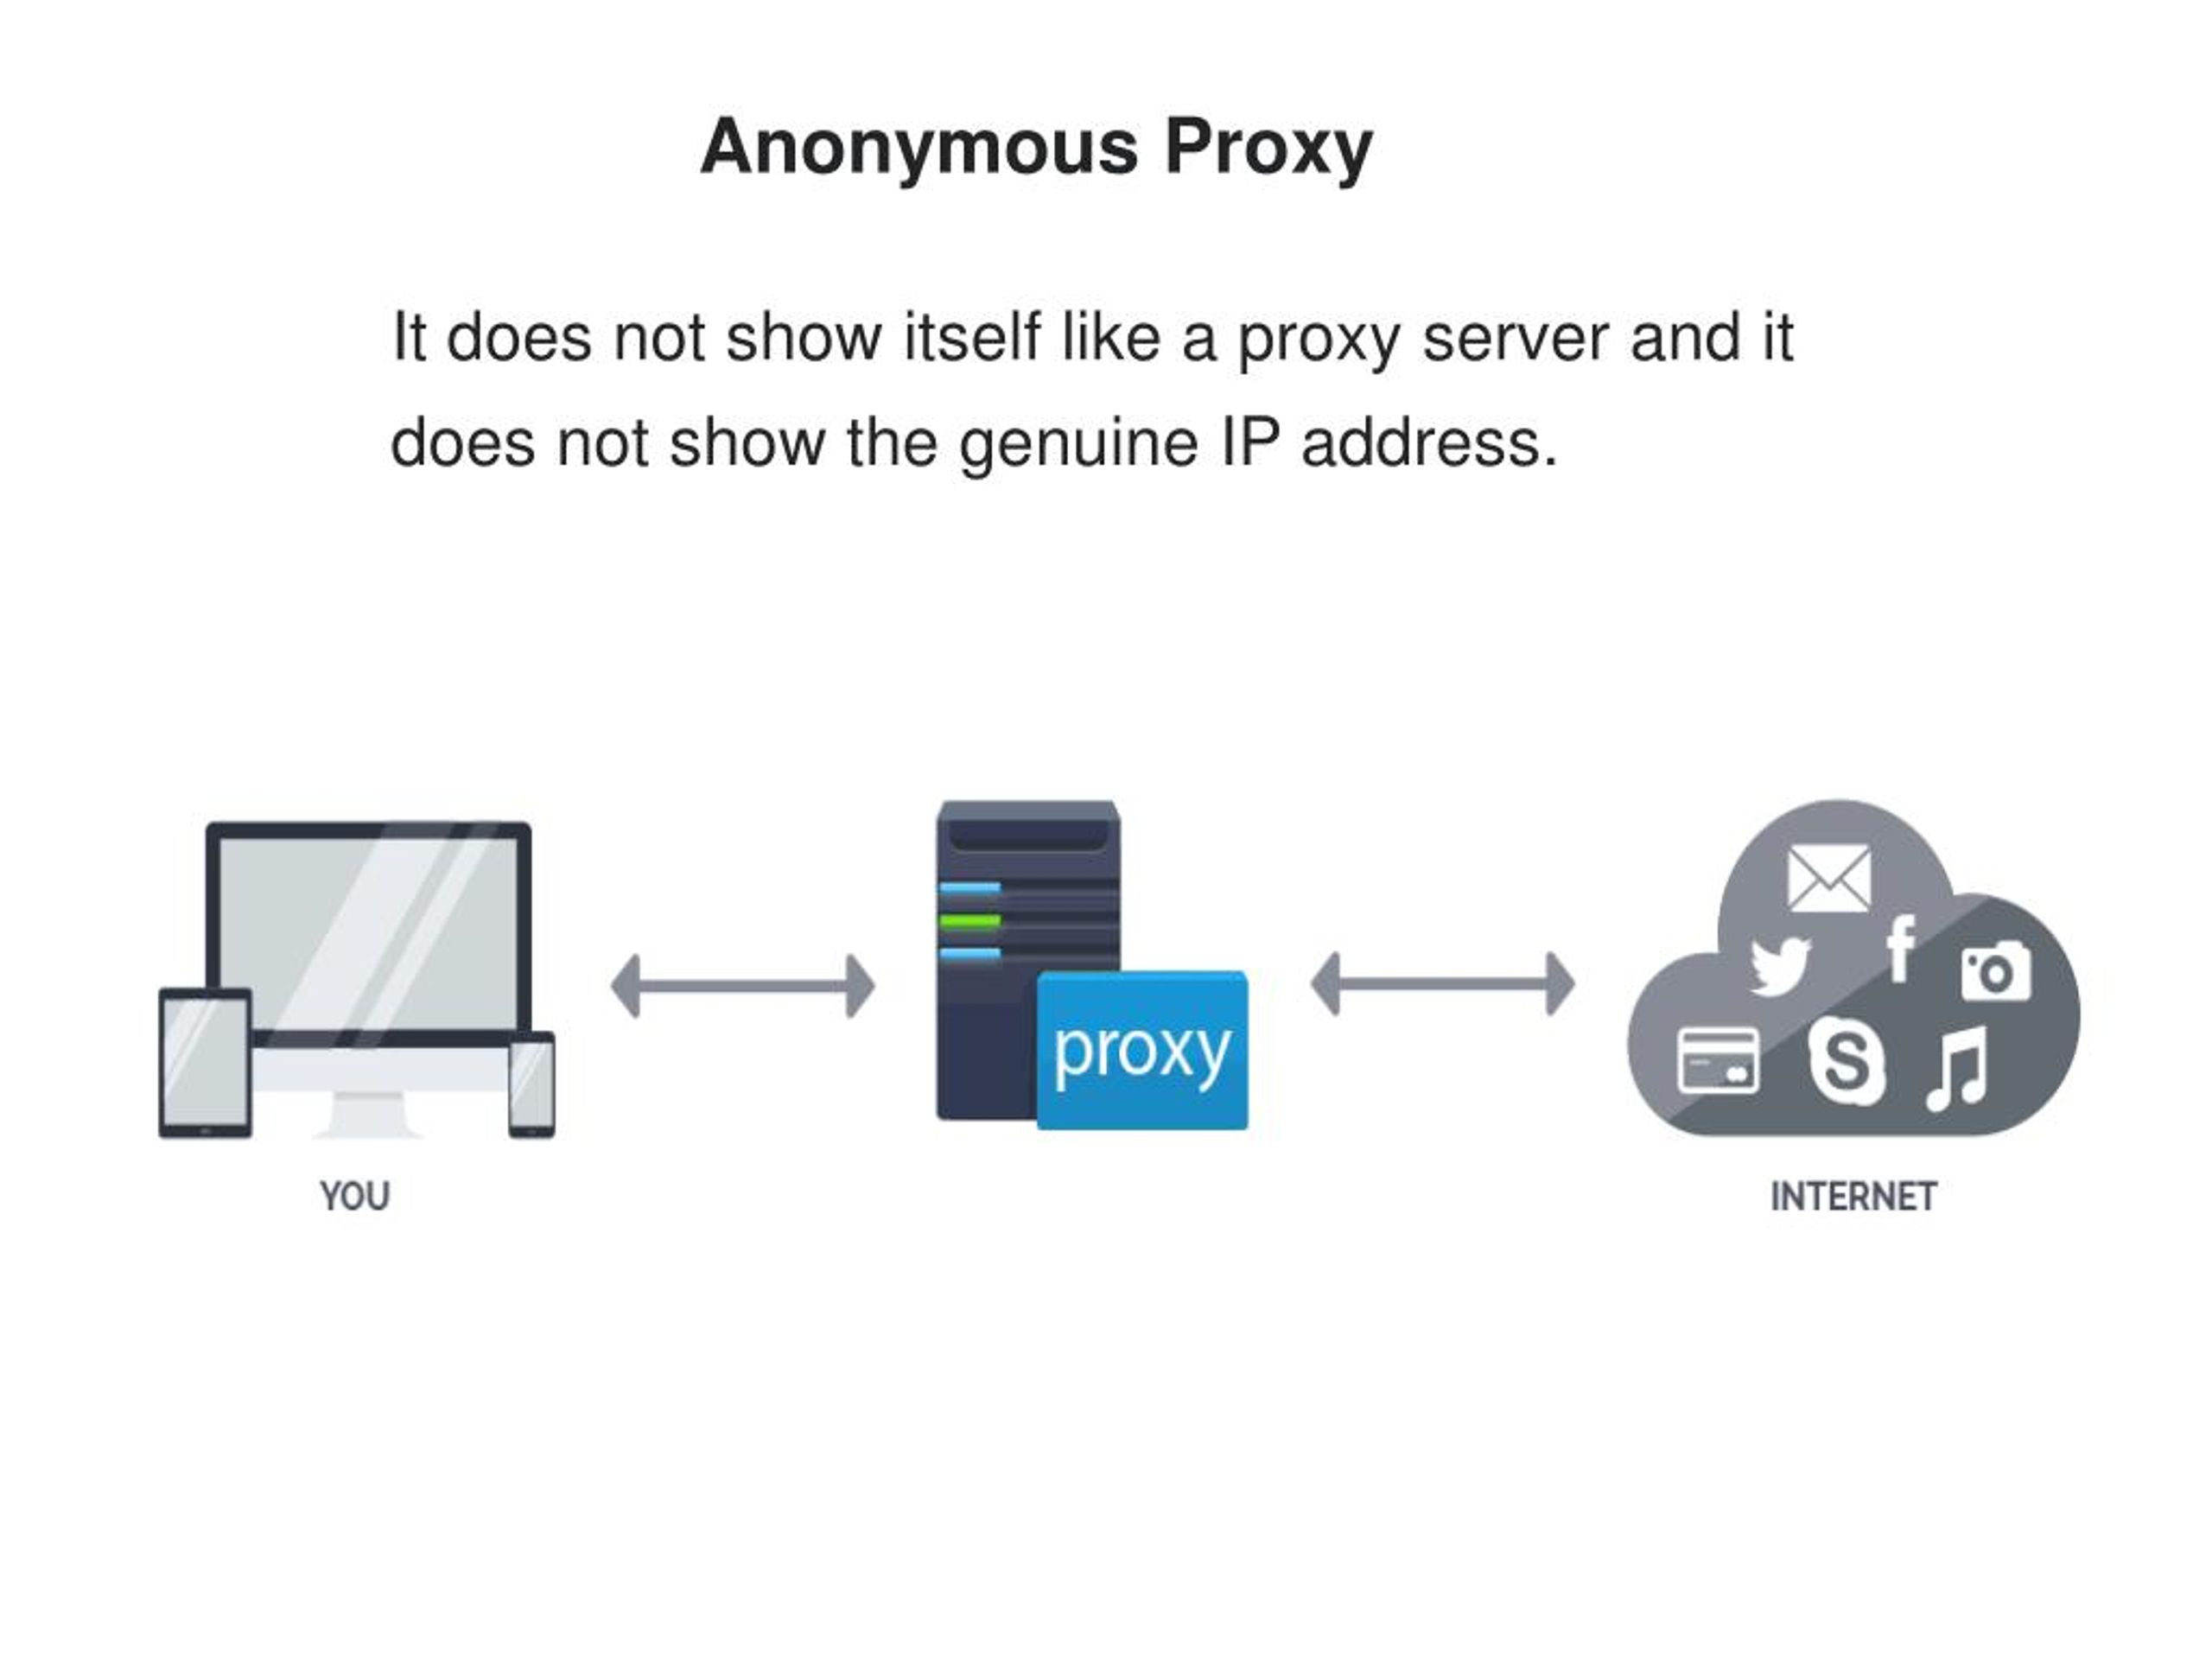 Mobile proxy сервер. Анонимный прокси сервер. Прокси сервер схема. Функции прокси сервера. Прозрачный прокси сервер.